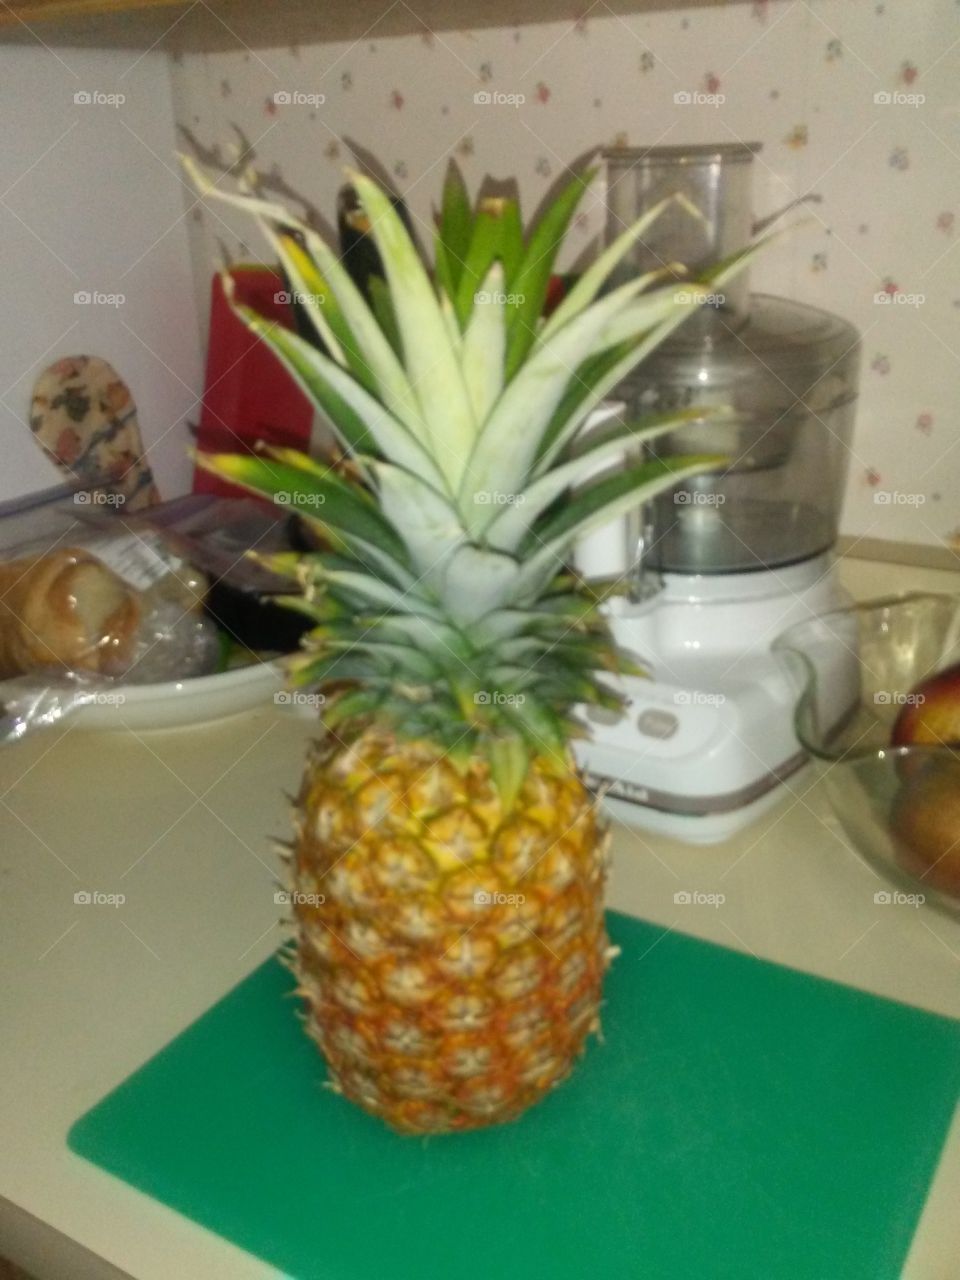 Perfect ripe pineapple